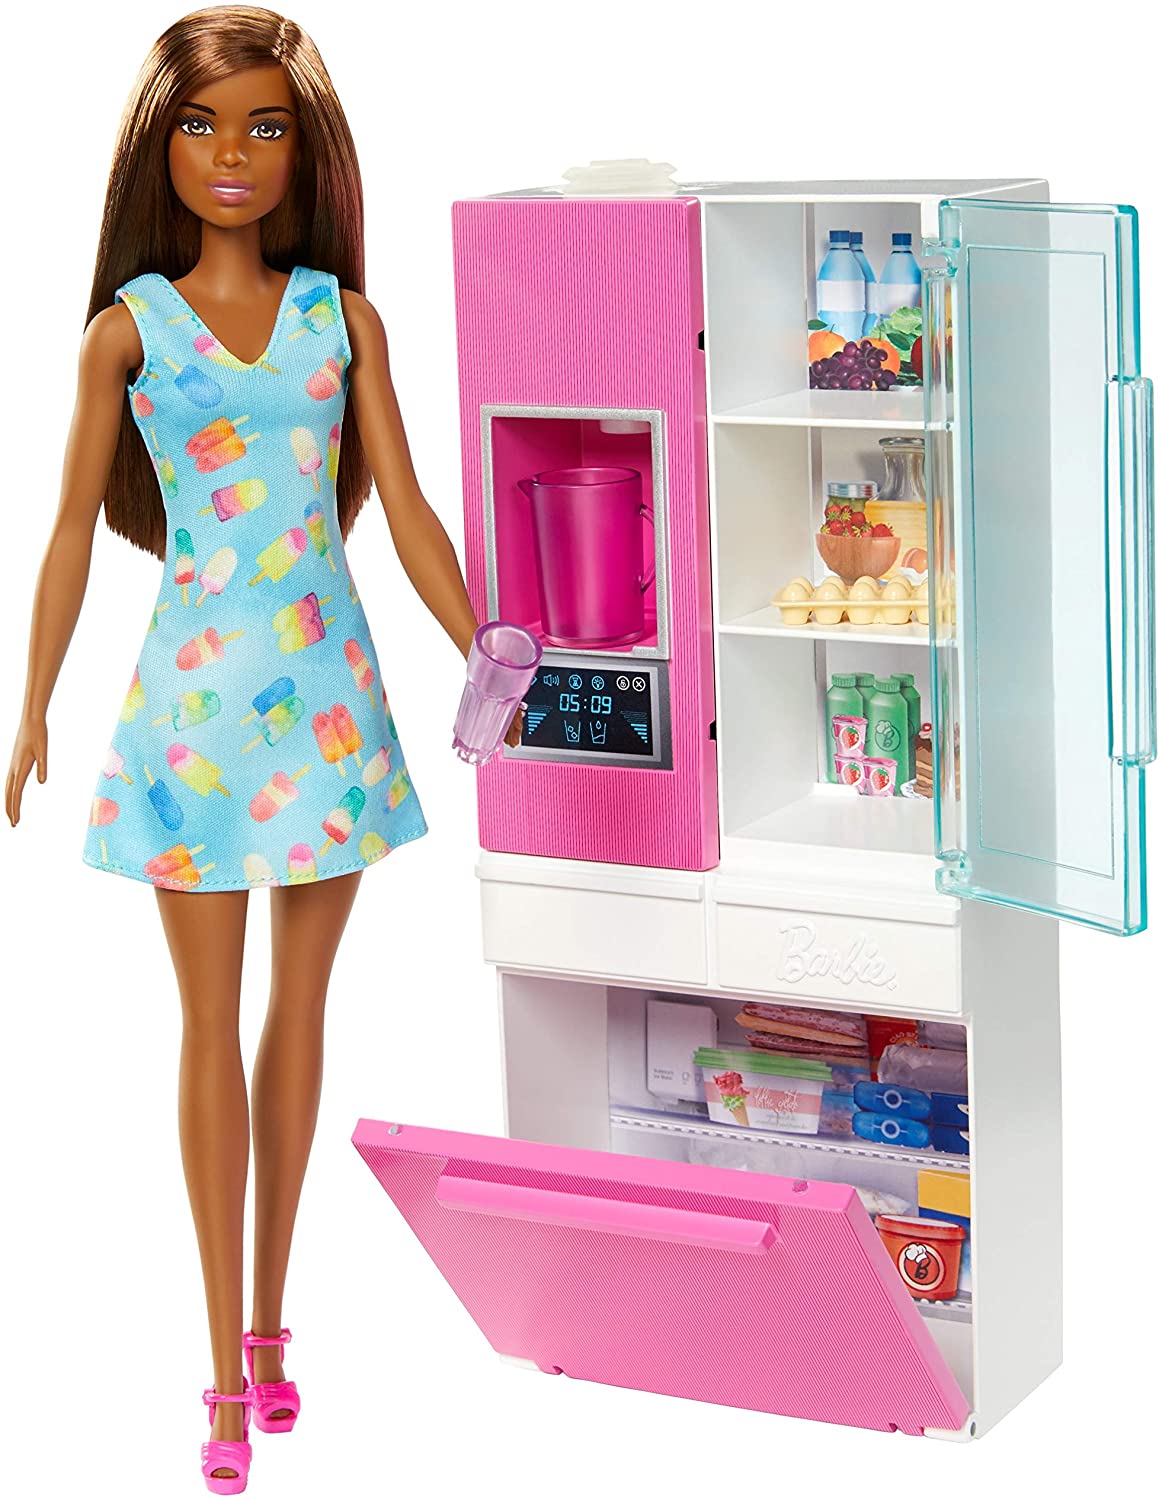 Barbie- Bambola Bruna Playset Arredamento con Frigorifero, Distributor –